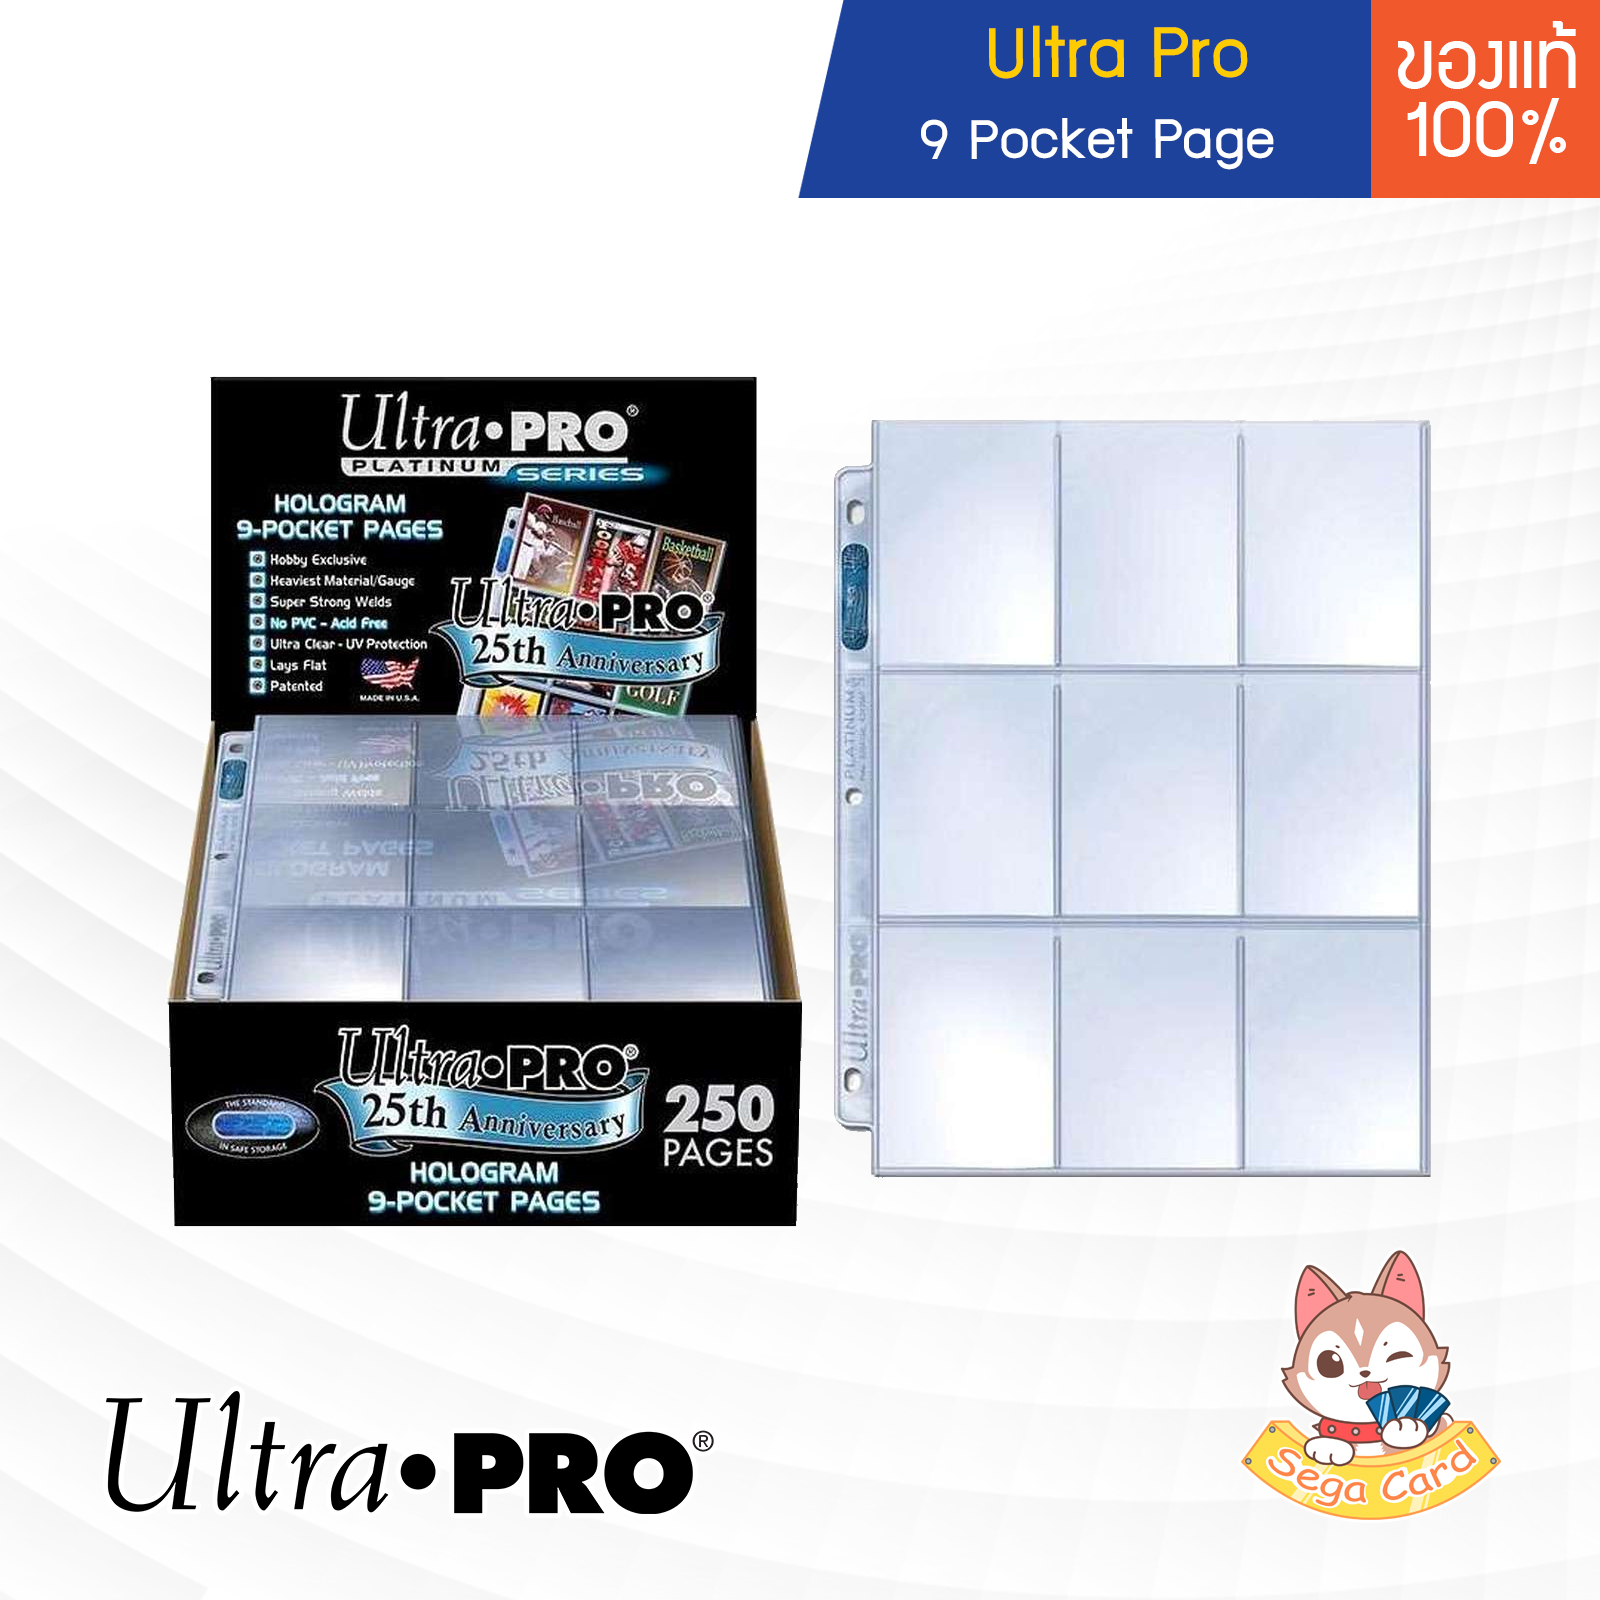 [Ultra Pro] 9 Pocket Page Platinum - ไส้แฟ้ม 9 ช่อง ** 11 รู ** อย่างดี ของแท้ (สำหรับ การ์ดไอดอล เกาหลี / Pokemon TCG)